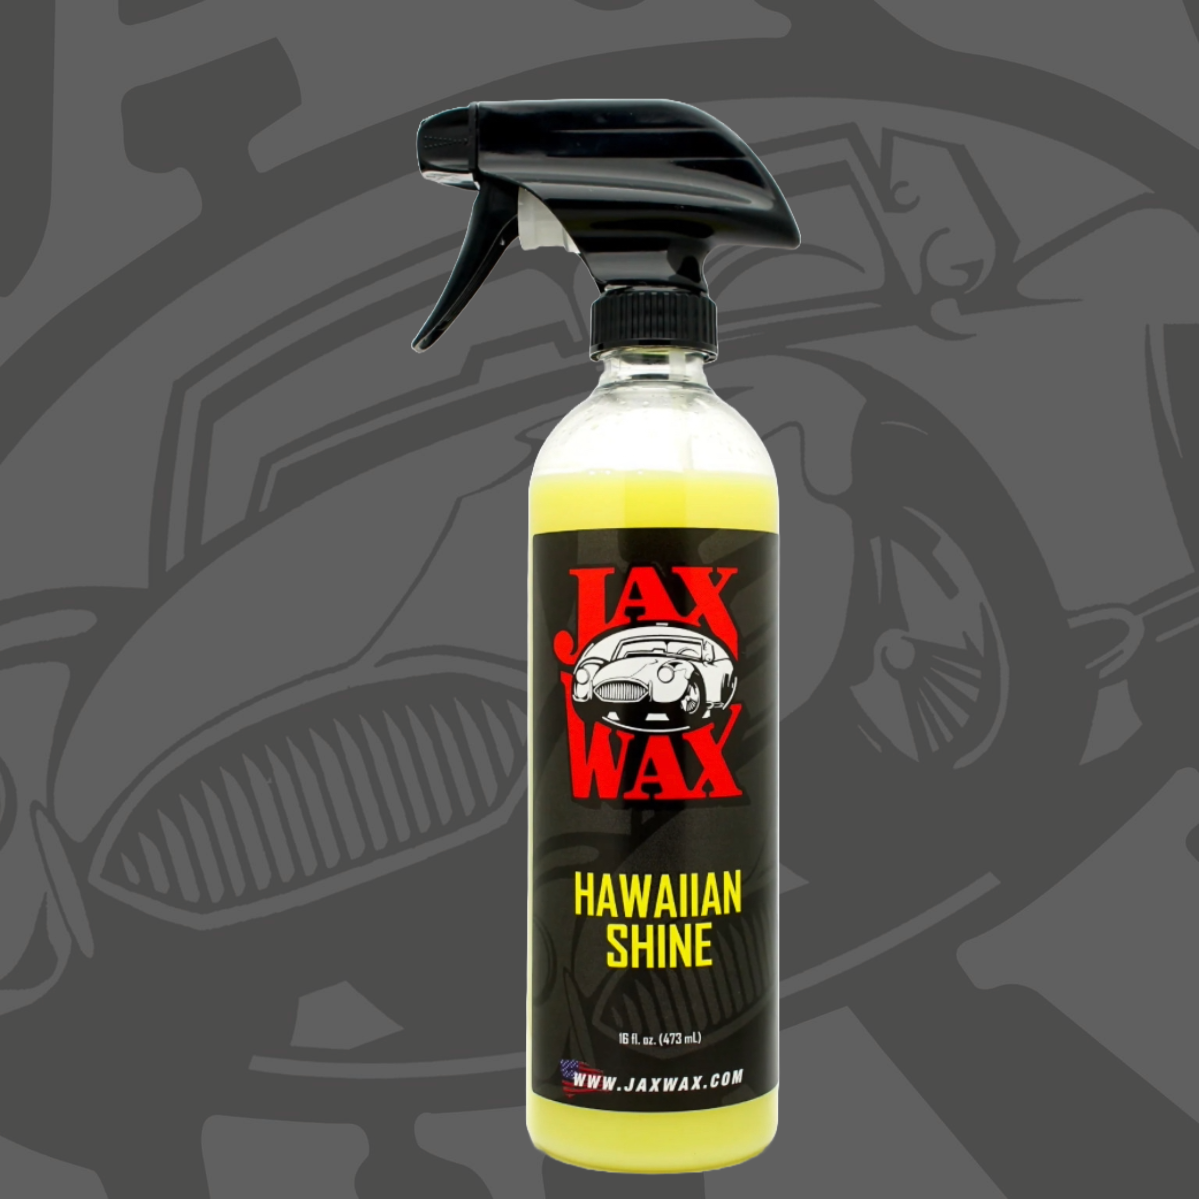 Products - Jax Wax